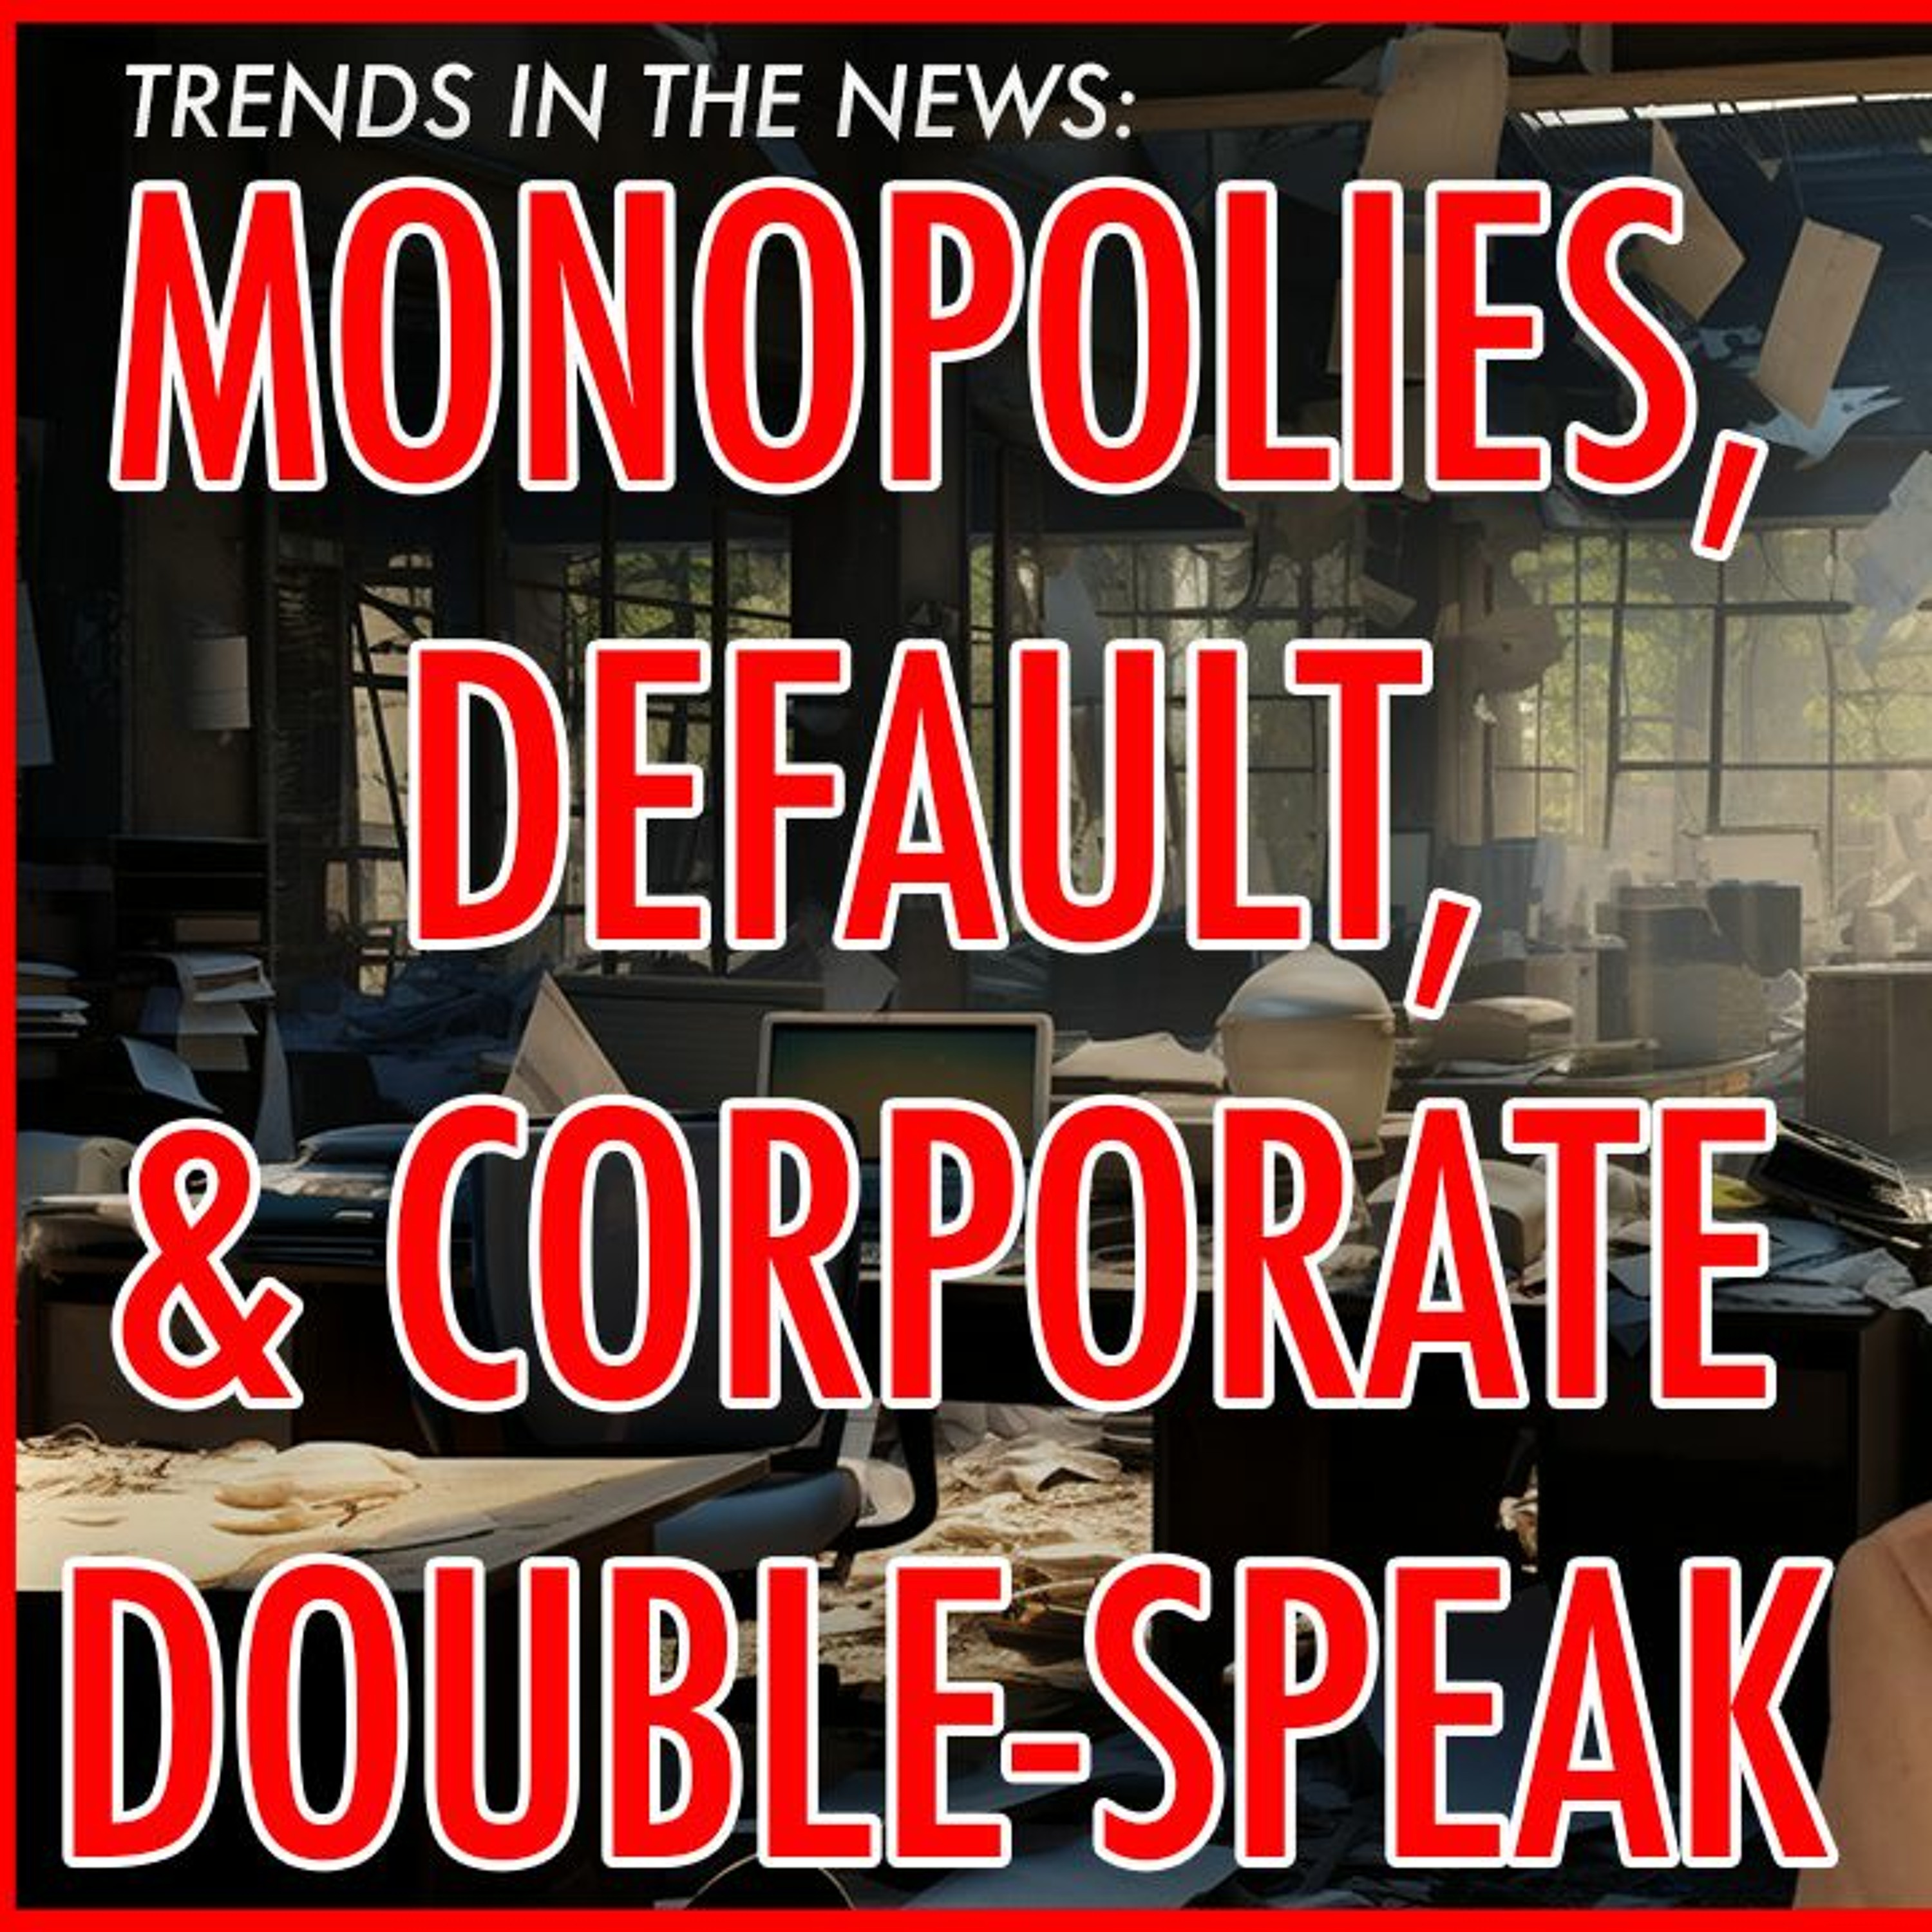 MONOPOLIES, DEFAULTS, & CORPORATE DOUBLE-SPEAK